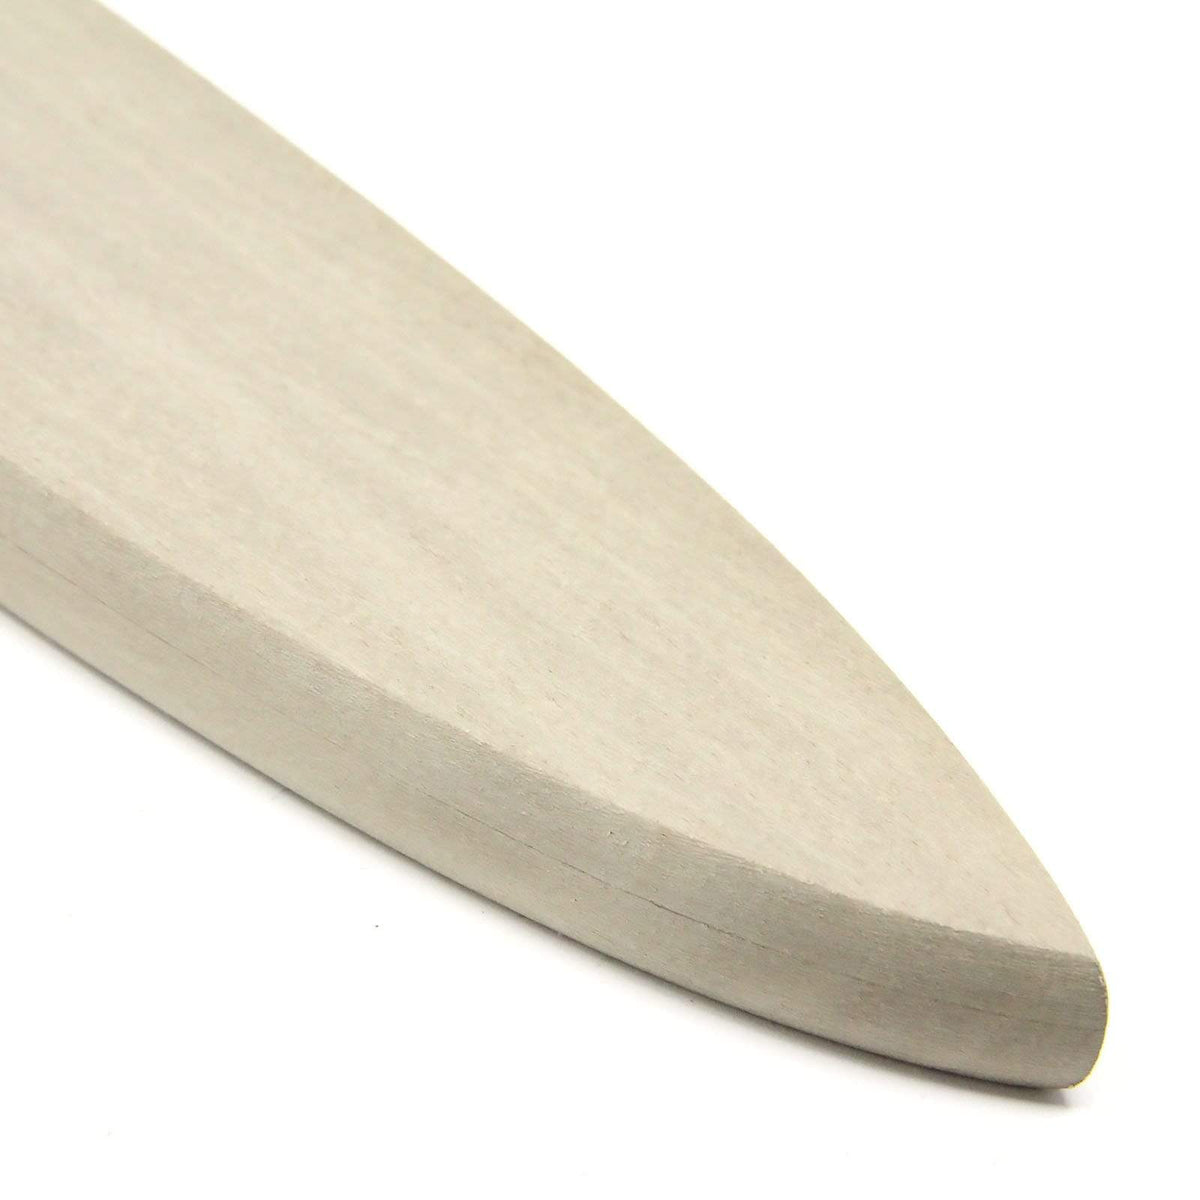 Universal Wooden Saya Kitchen Knife Sheath for Petty Knife Knife Sheaths